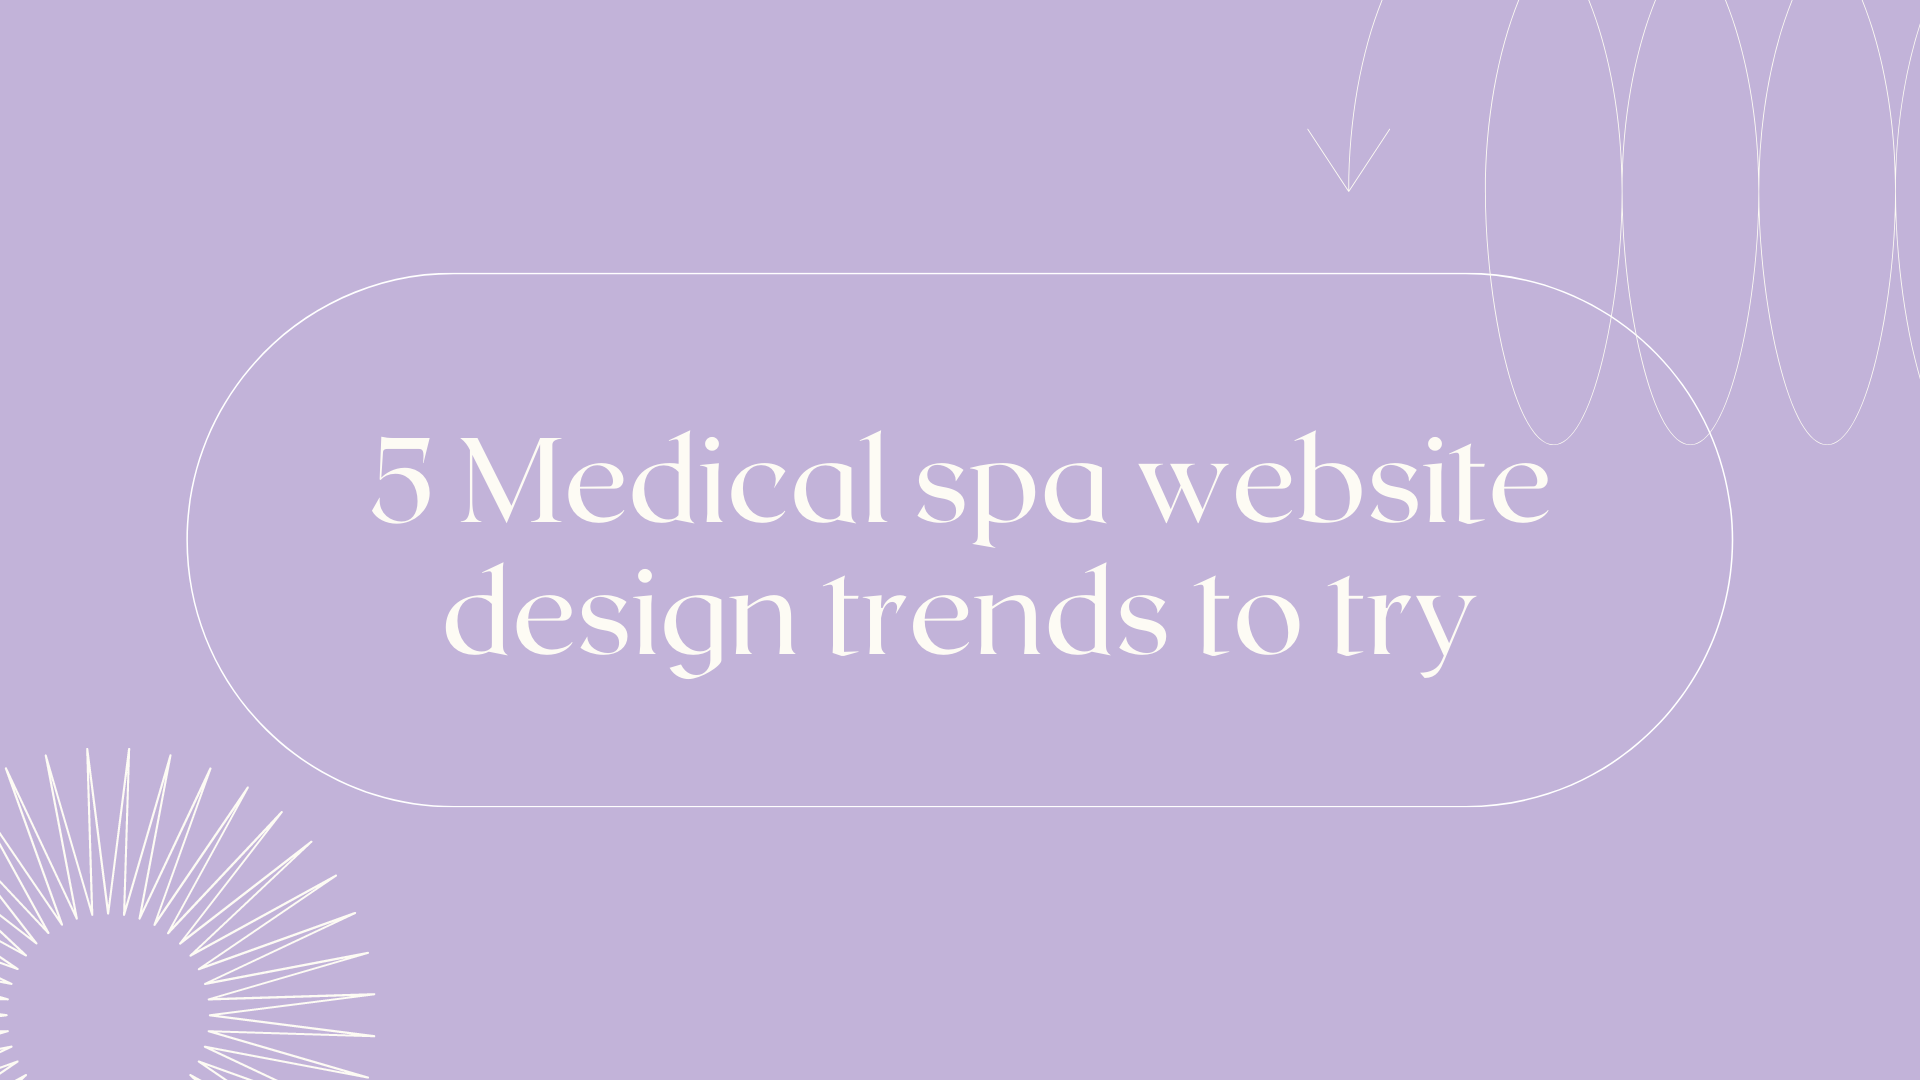 Medical spa website design trends to try